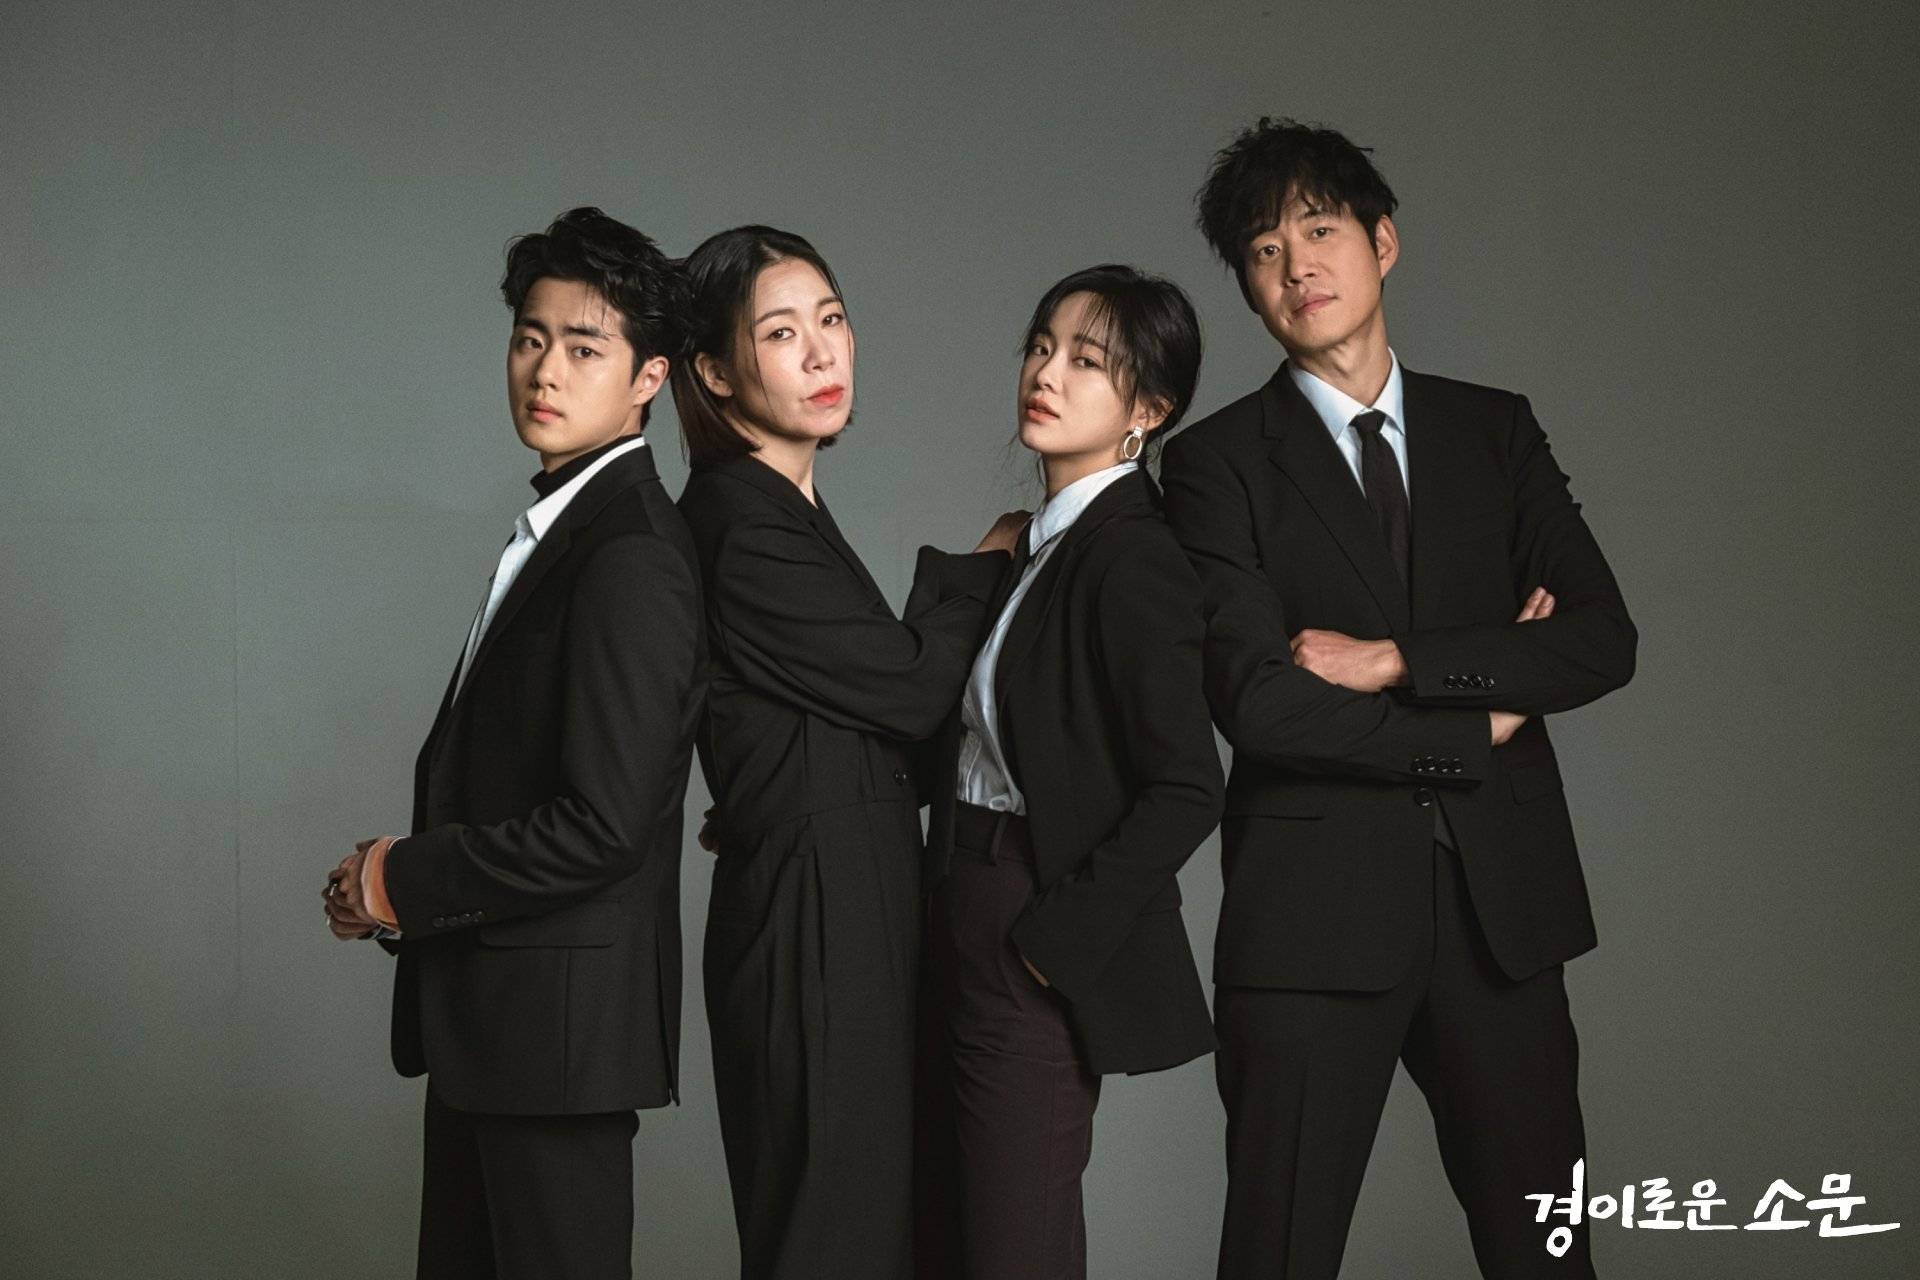 Photos Cast Photoshoot Added For The Korean Drama The Uncanny Counter Hancinema 2514